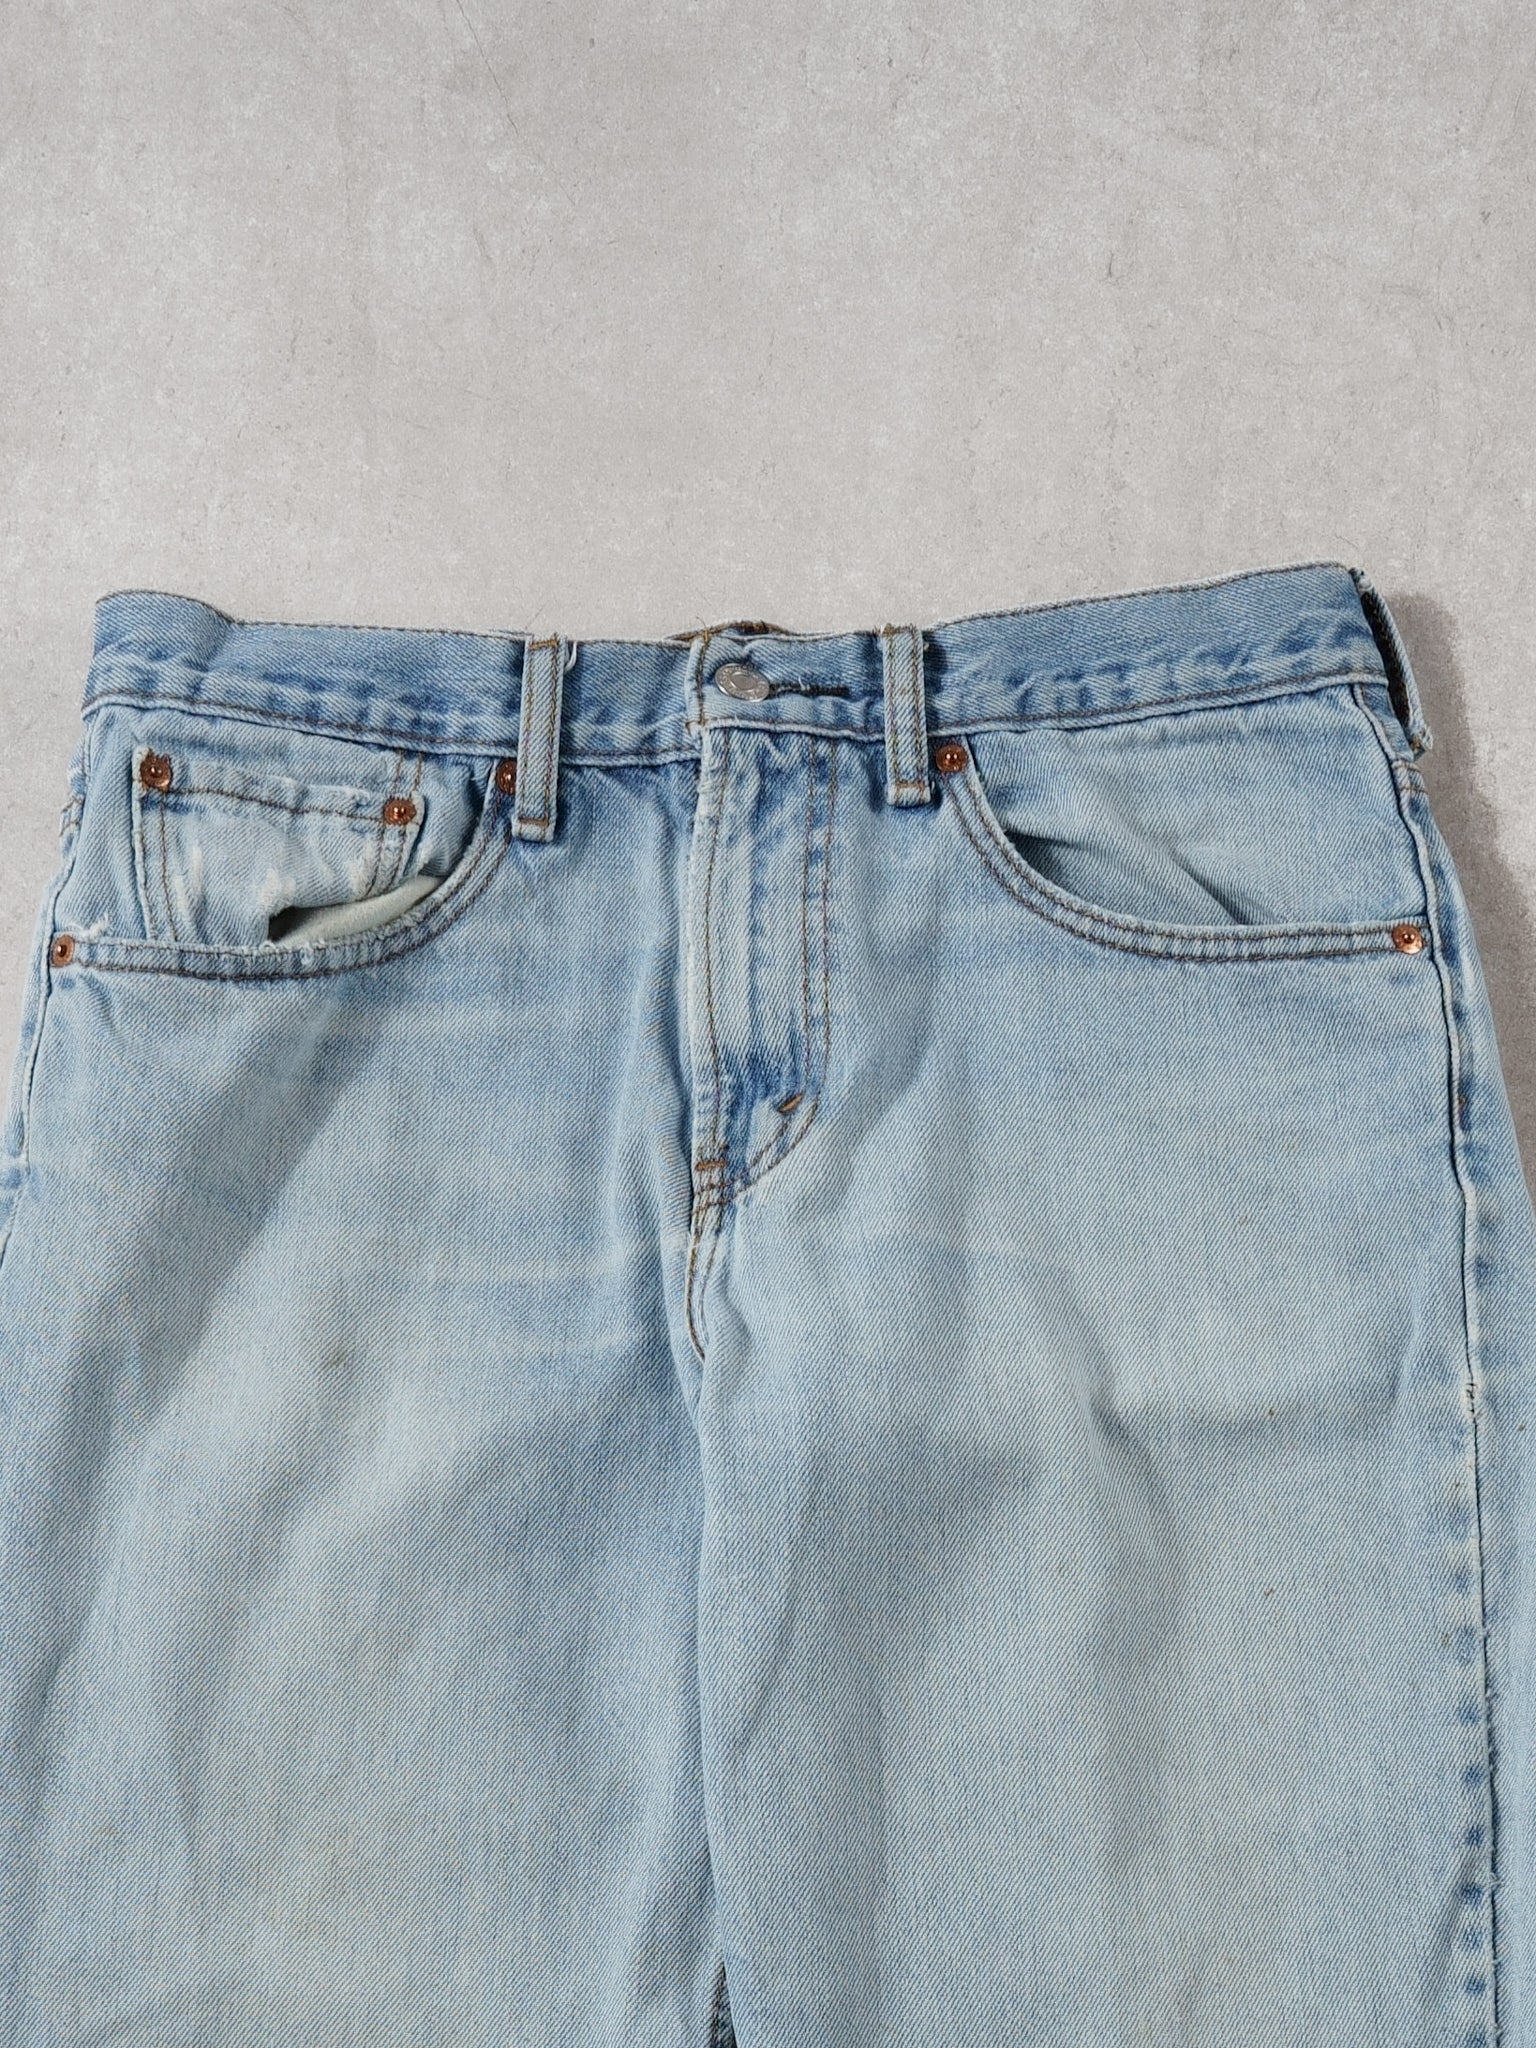 Vintage 90s Light Blue Levi's Straight Denim Jeans (30x32)